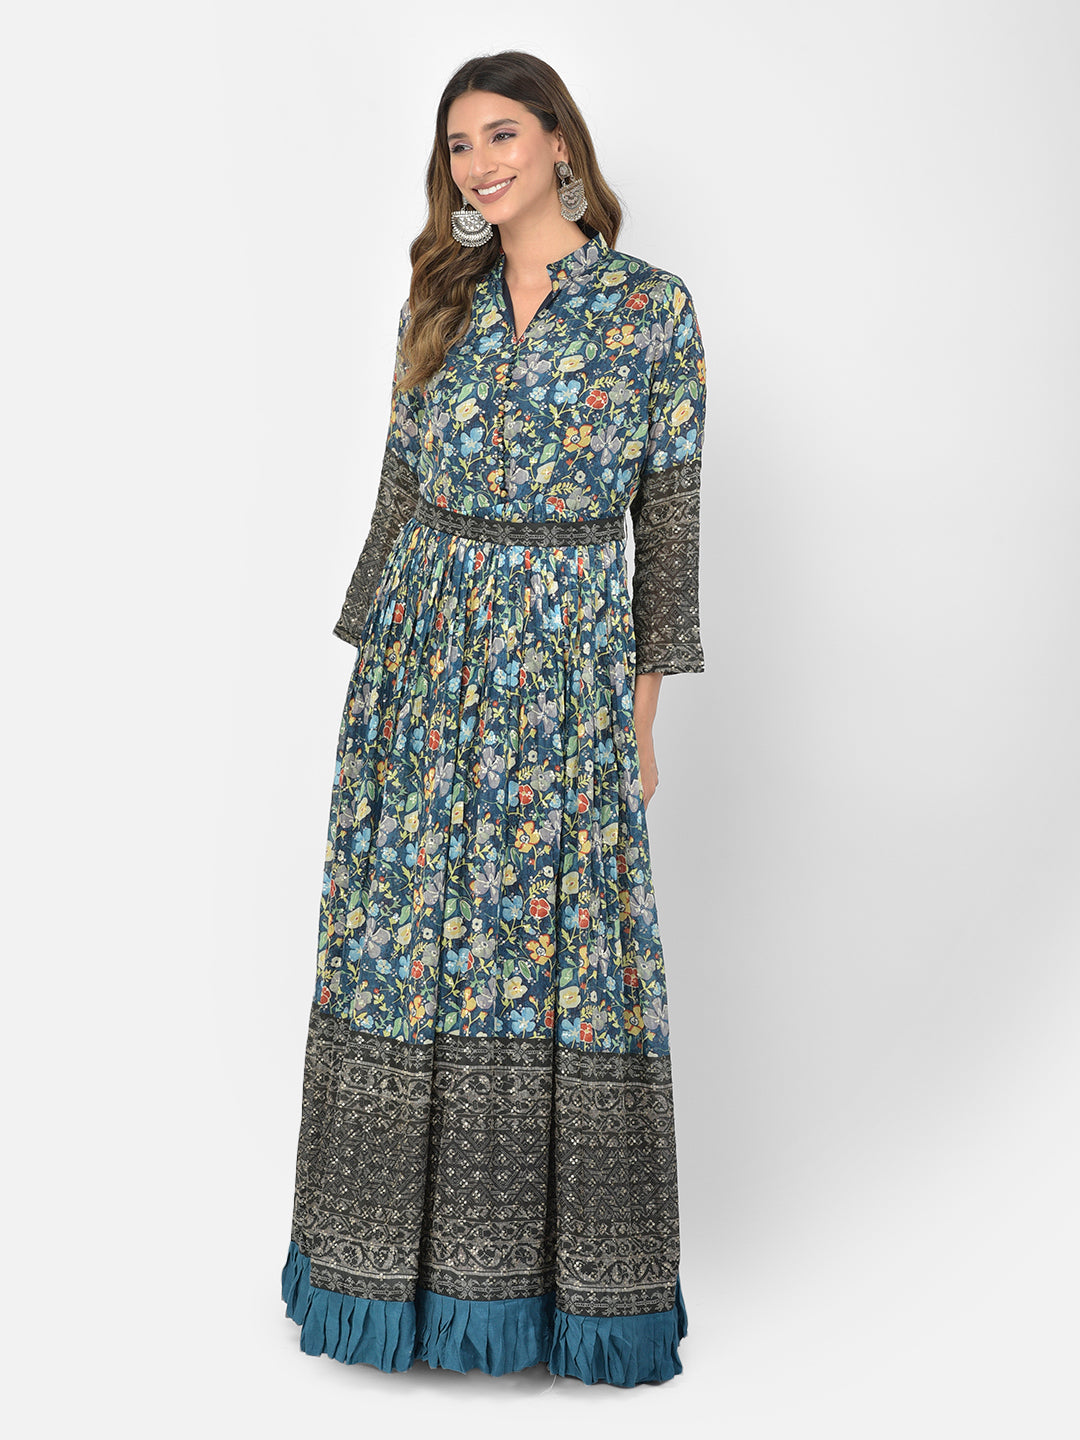 Neeru'S printed color, georgette fabric gown